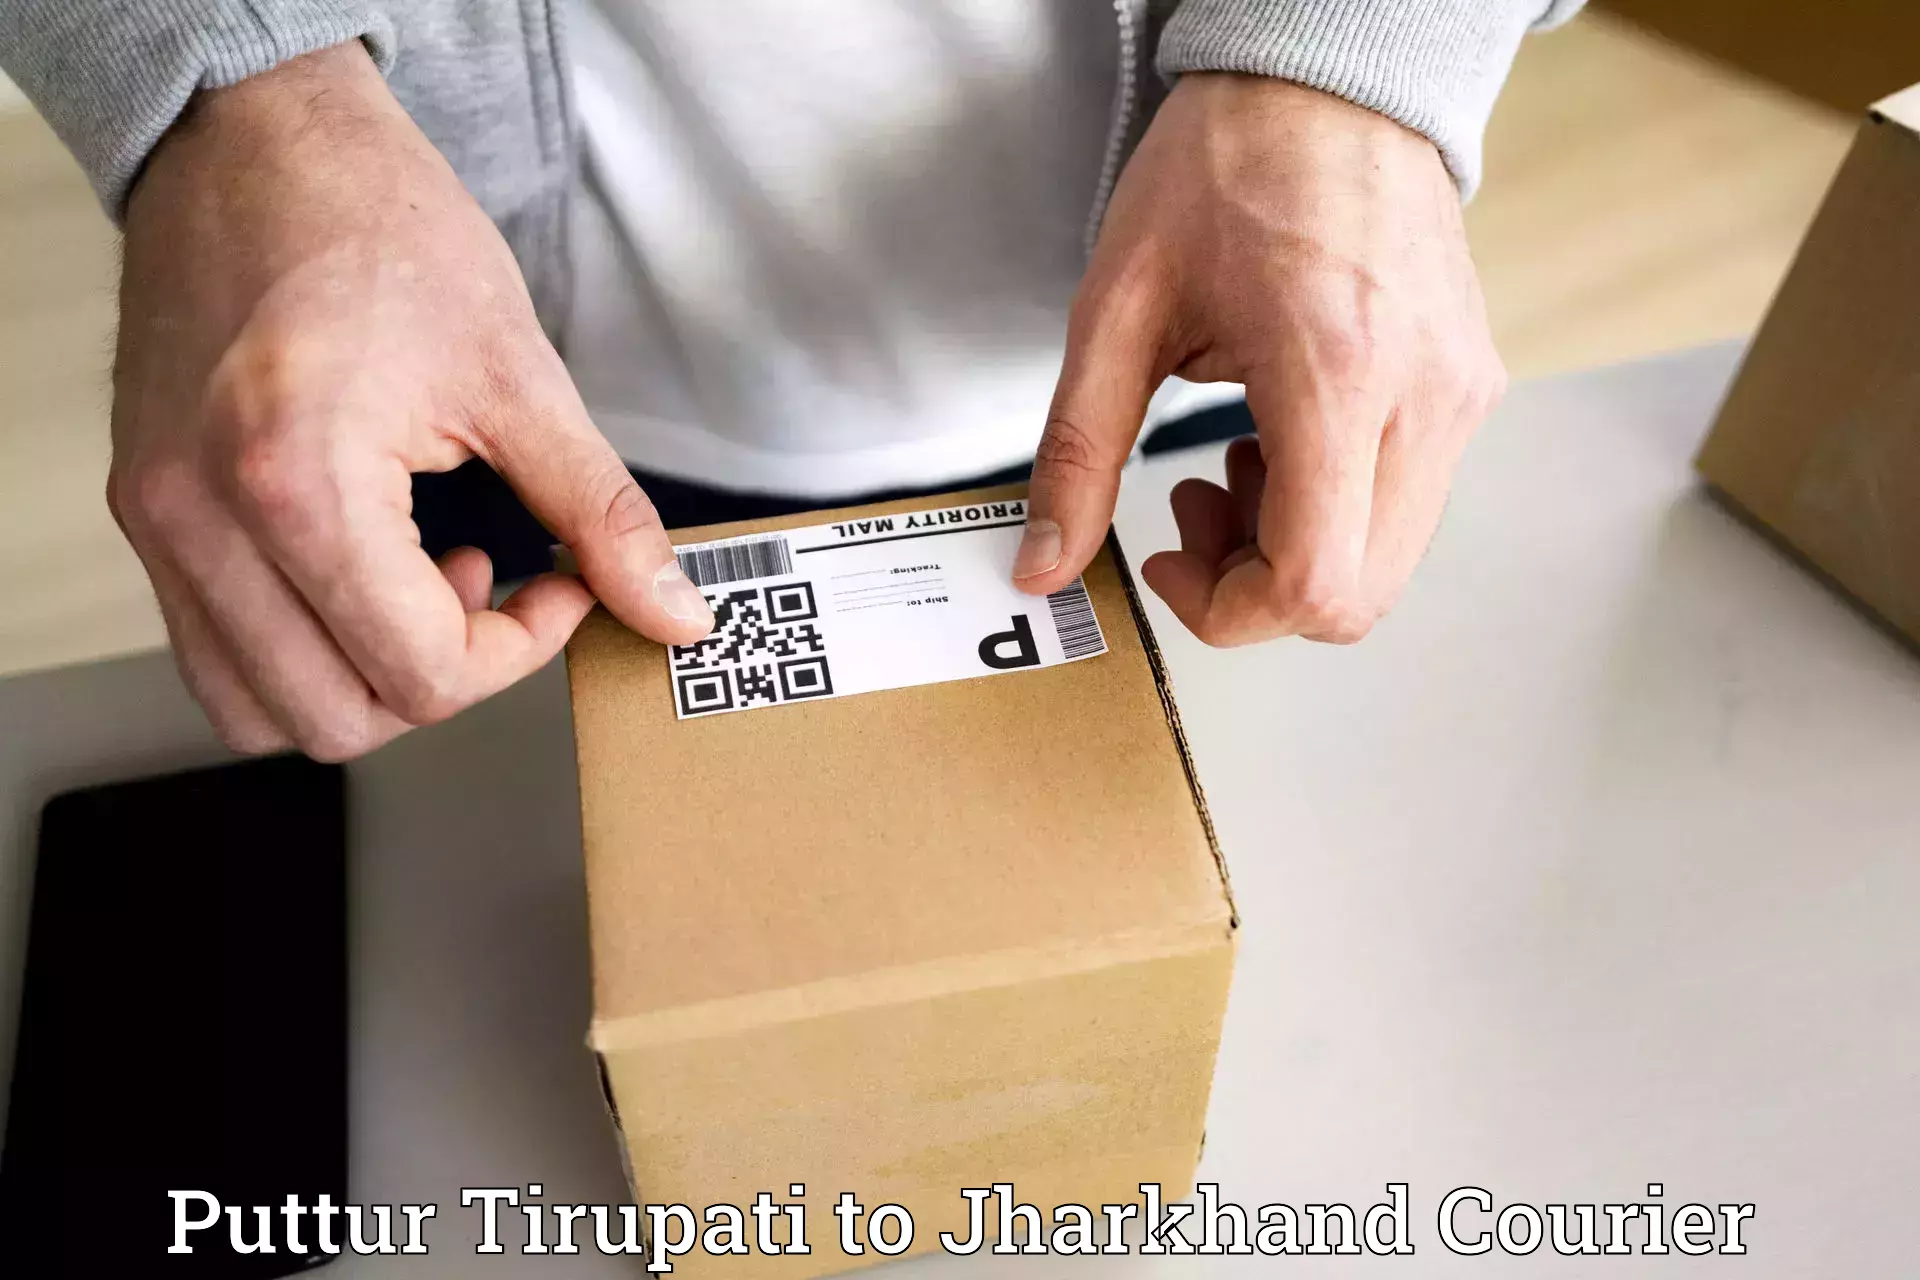 Courier service efficiency Puttur Tirupati to Chakradharpur